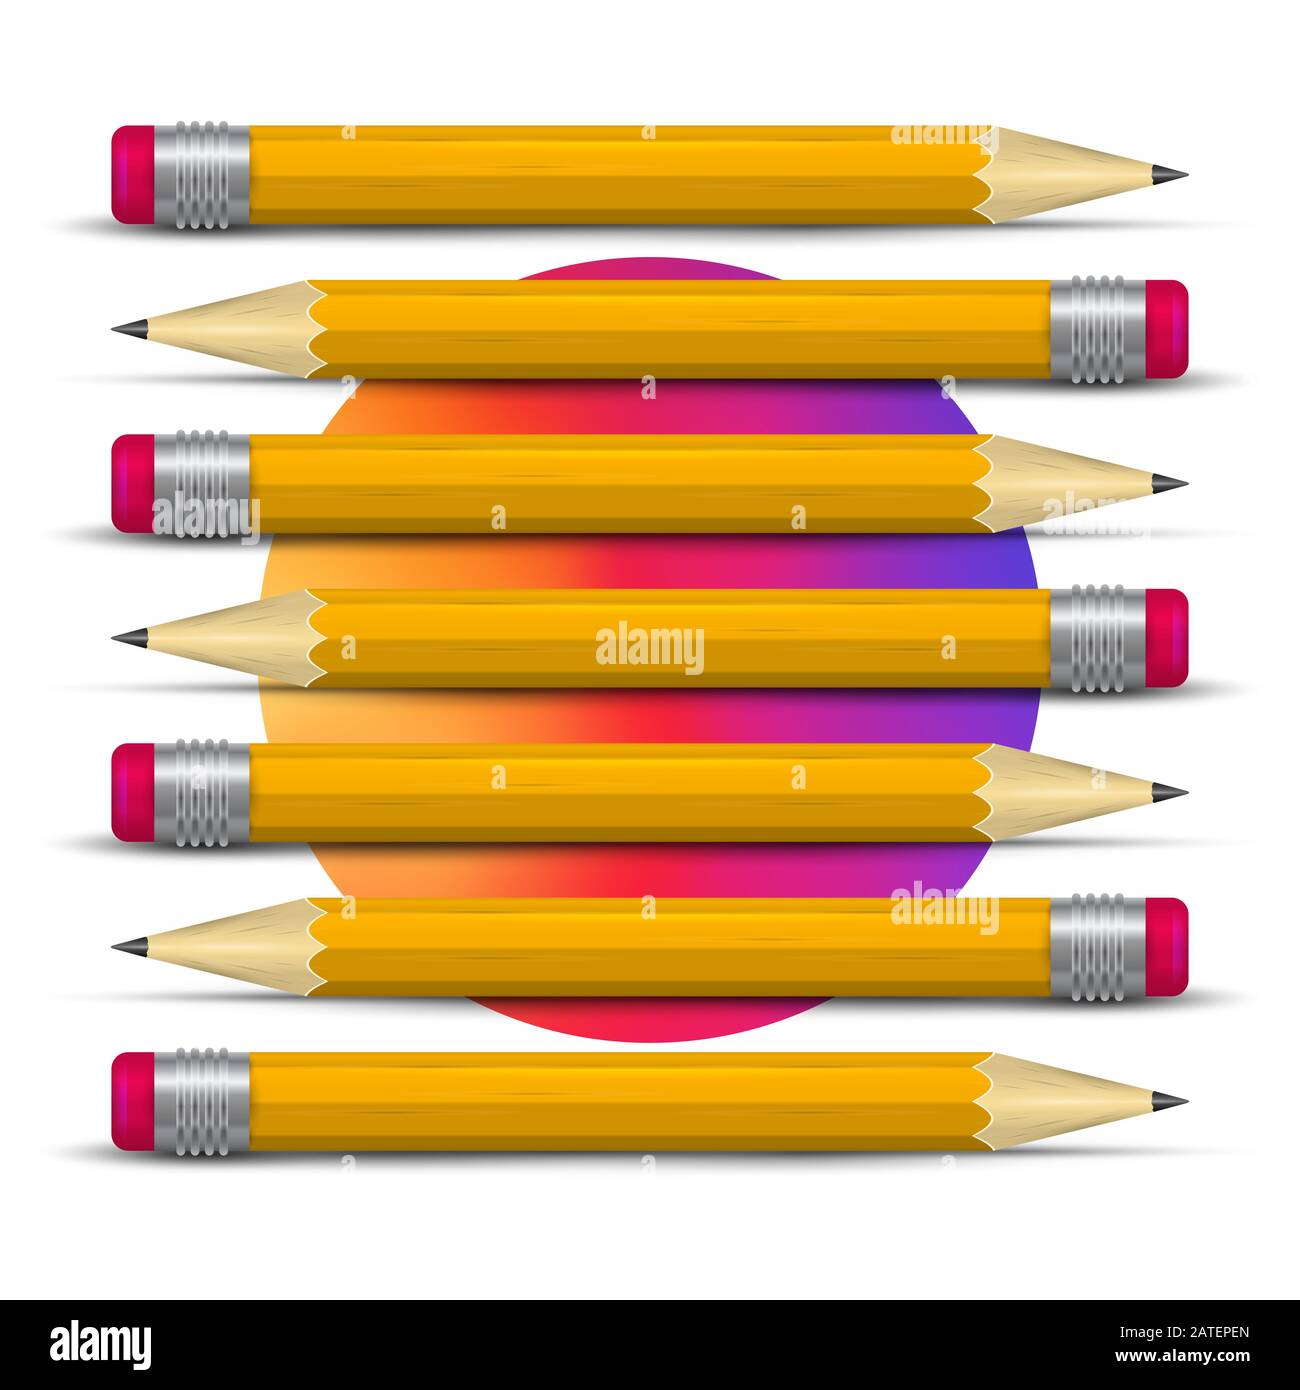 Realistic pencil set. Creation metaphor. Gradient circle. 3D pencil illustration. Writing orange sharp pencils with eraser and shadow. Stock Photo